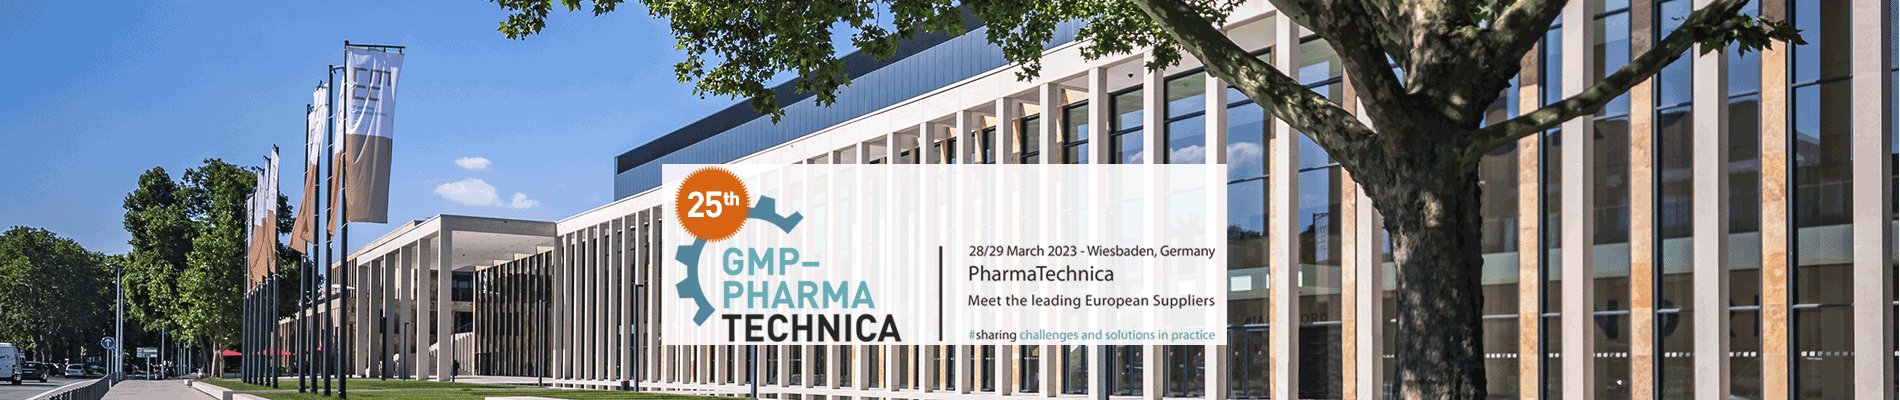 25th GMP-PharmaCongress 2023 - PharmaTechnica Expo